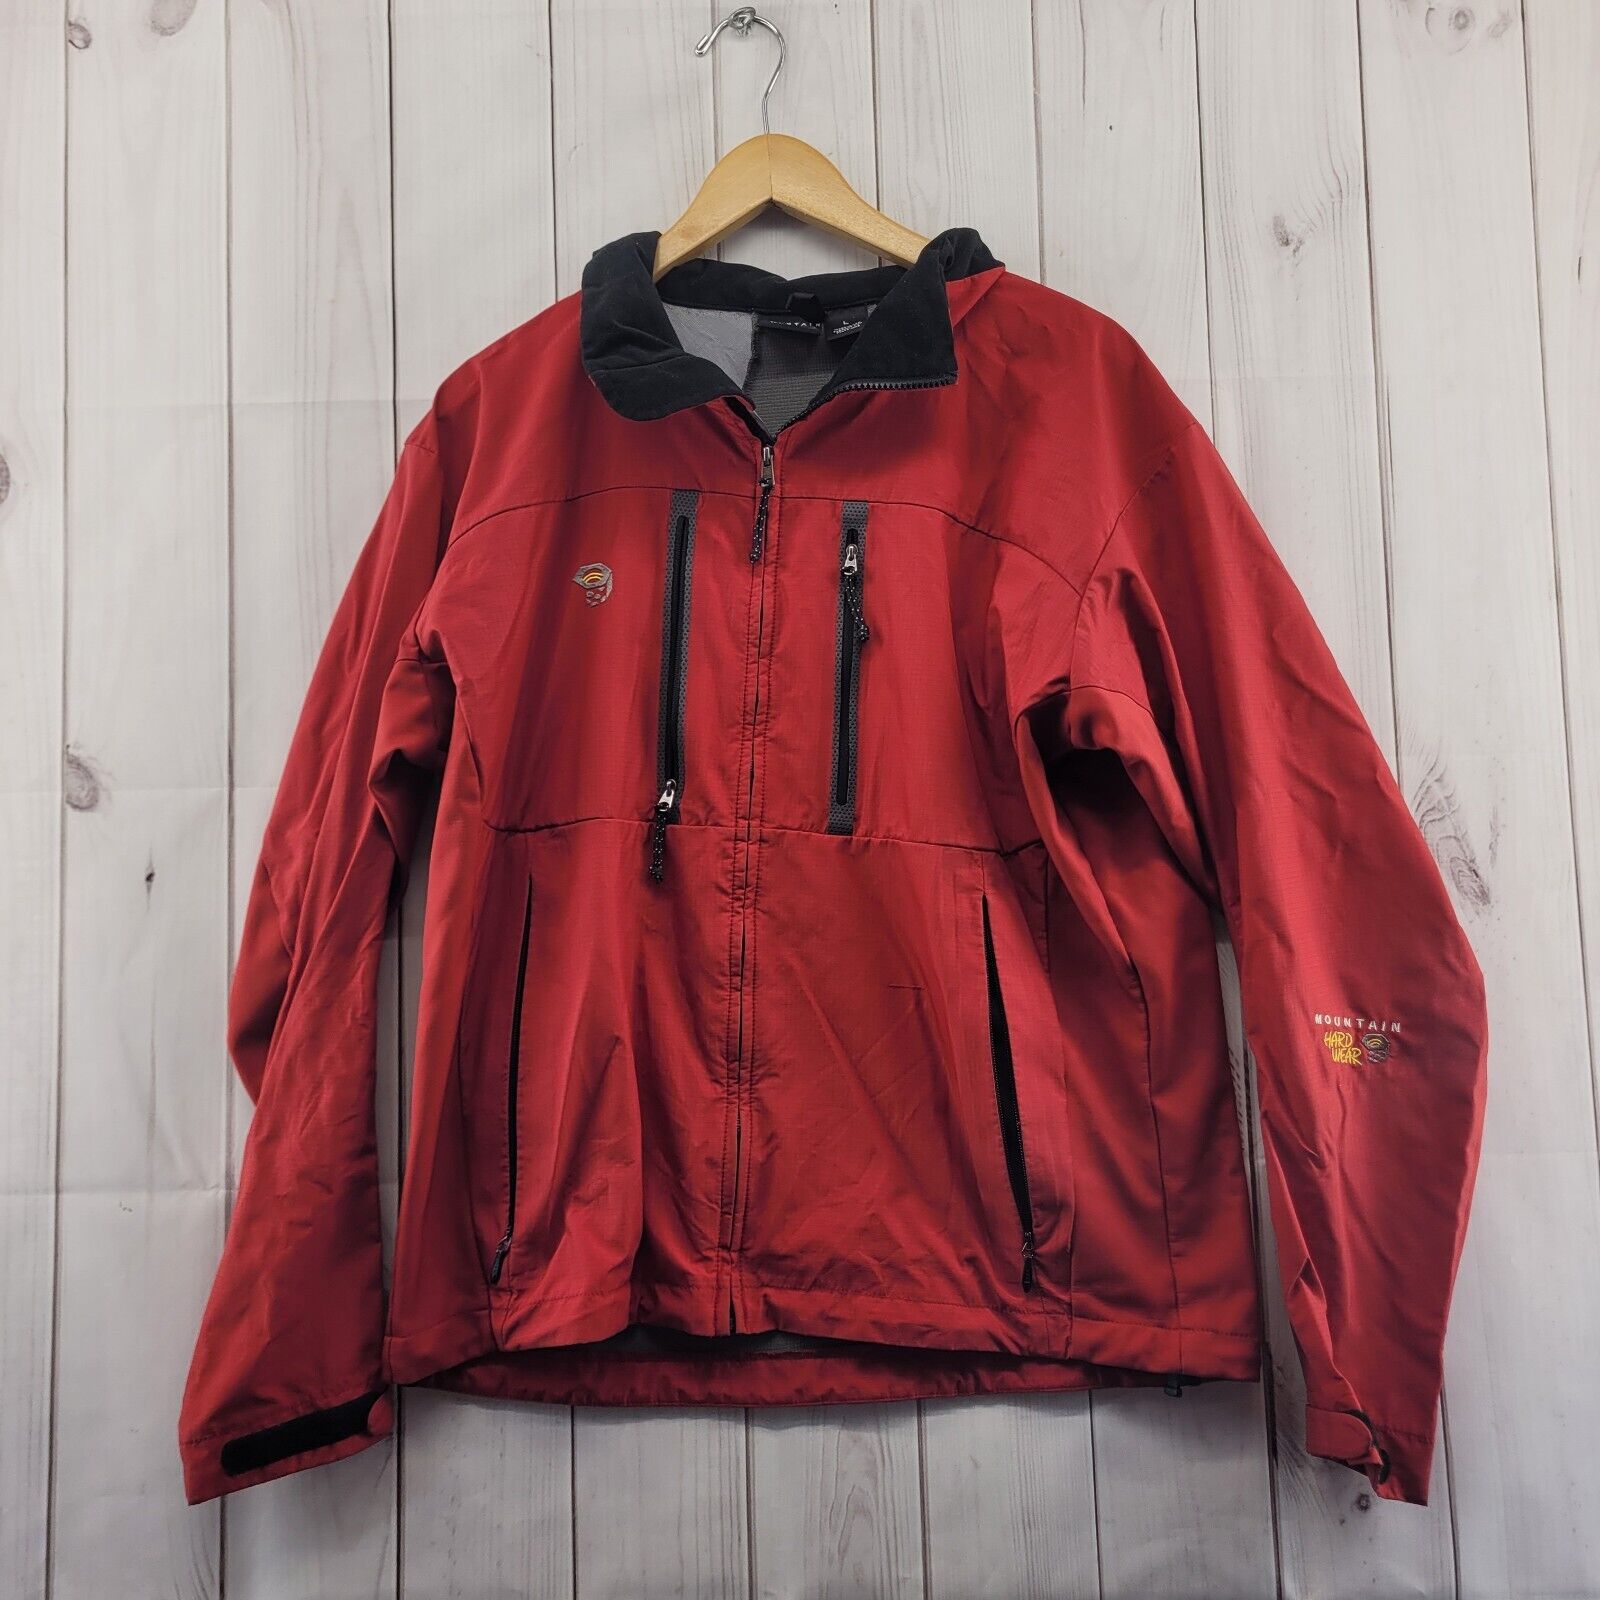 Vintage Mountain Hardwear Jacket Mens Large Red Black Shell Pockets Full Zip